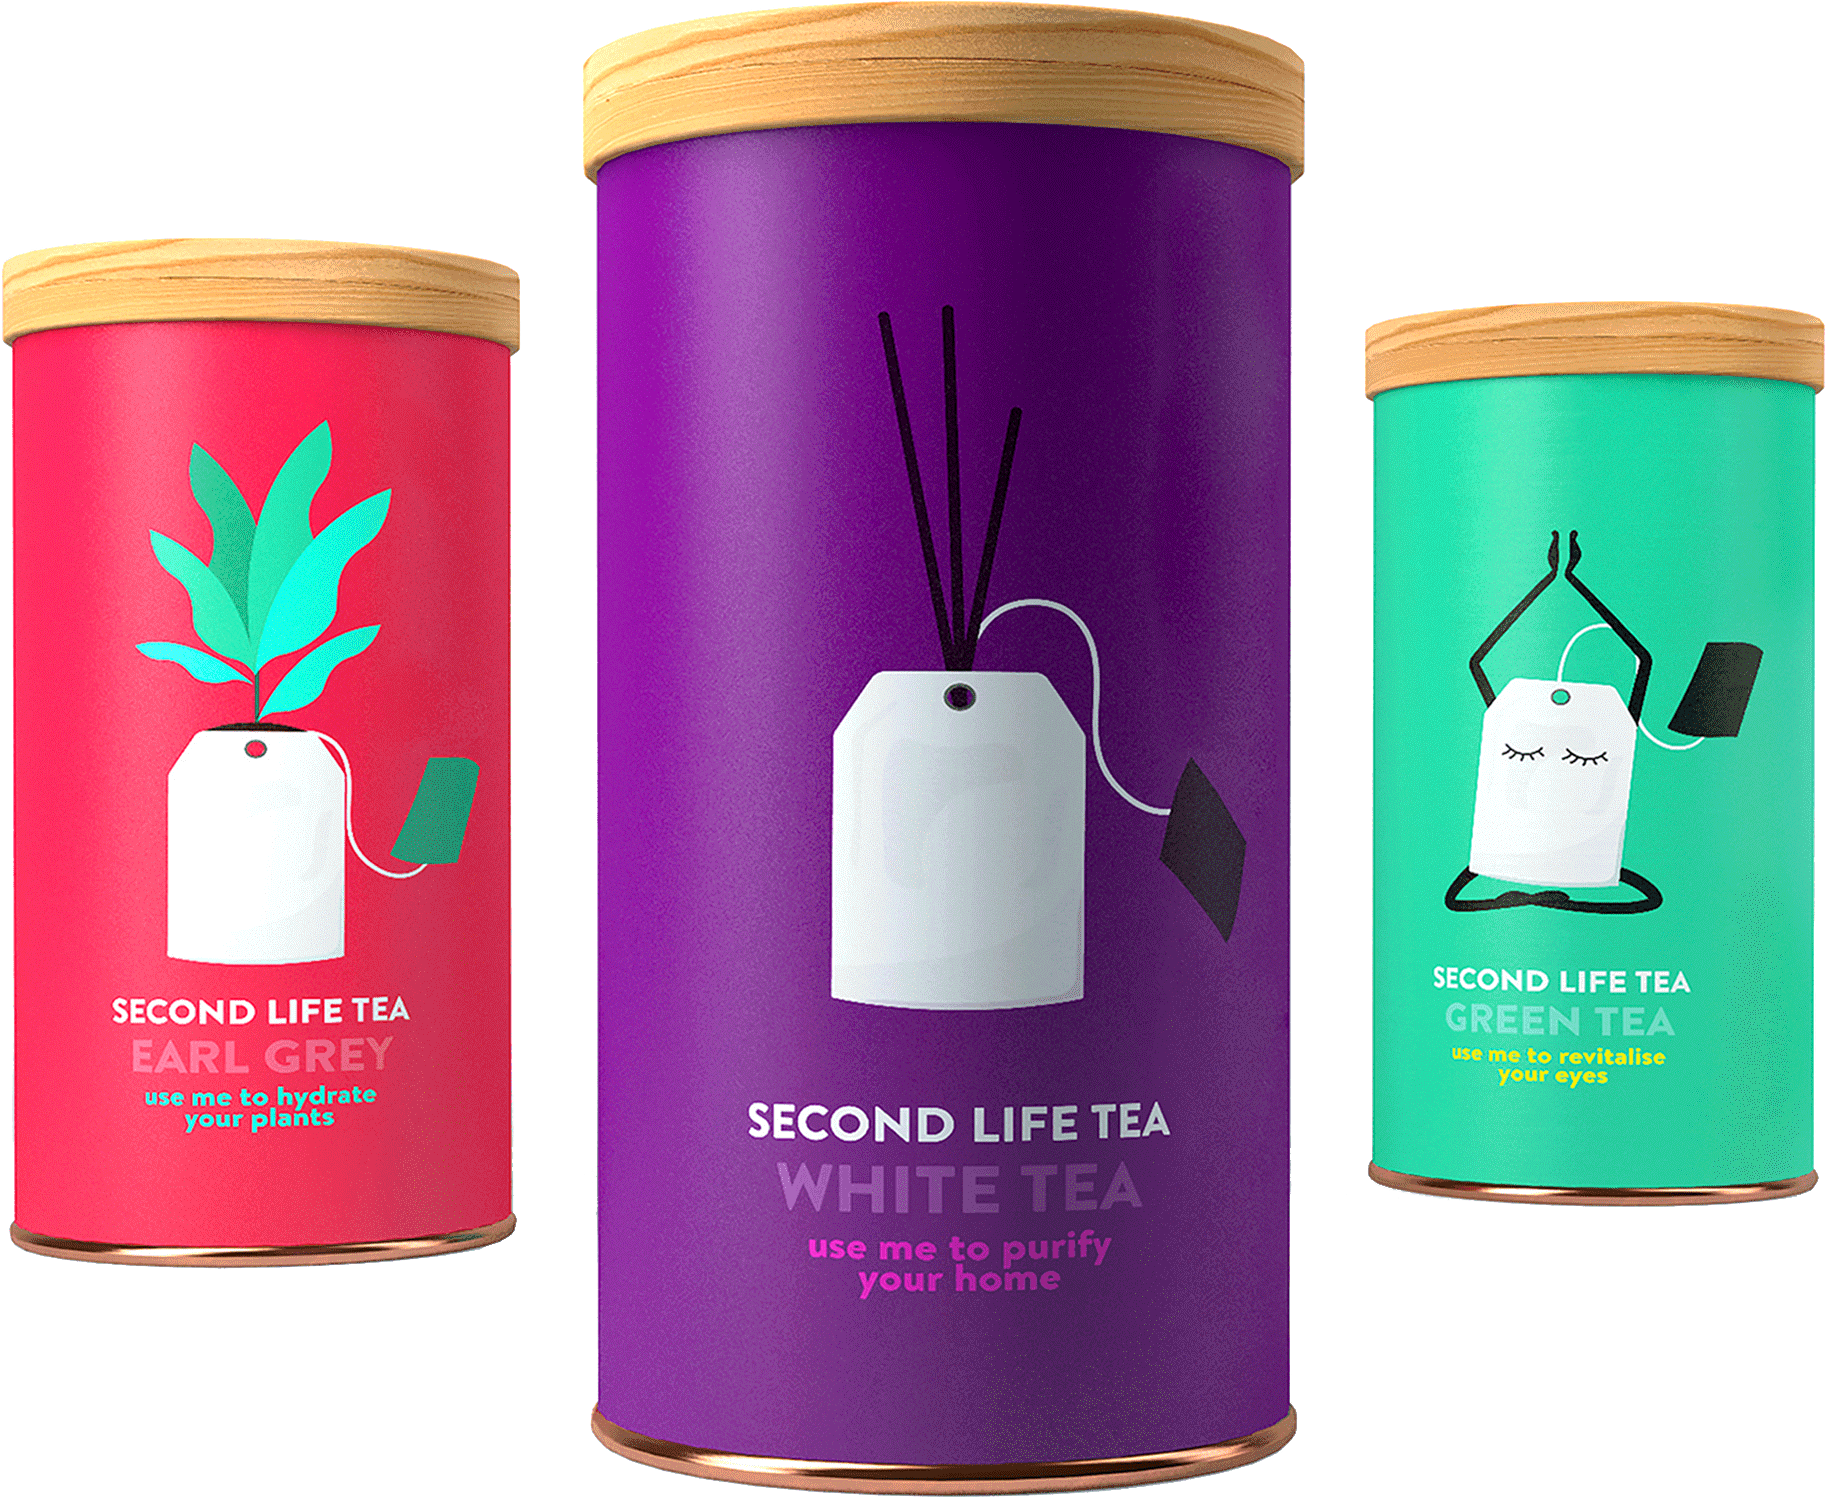 Second Life Tea is a conceptual packaging design for a reusable, multi-purpose tea